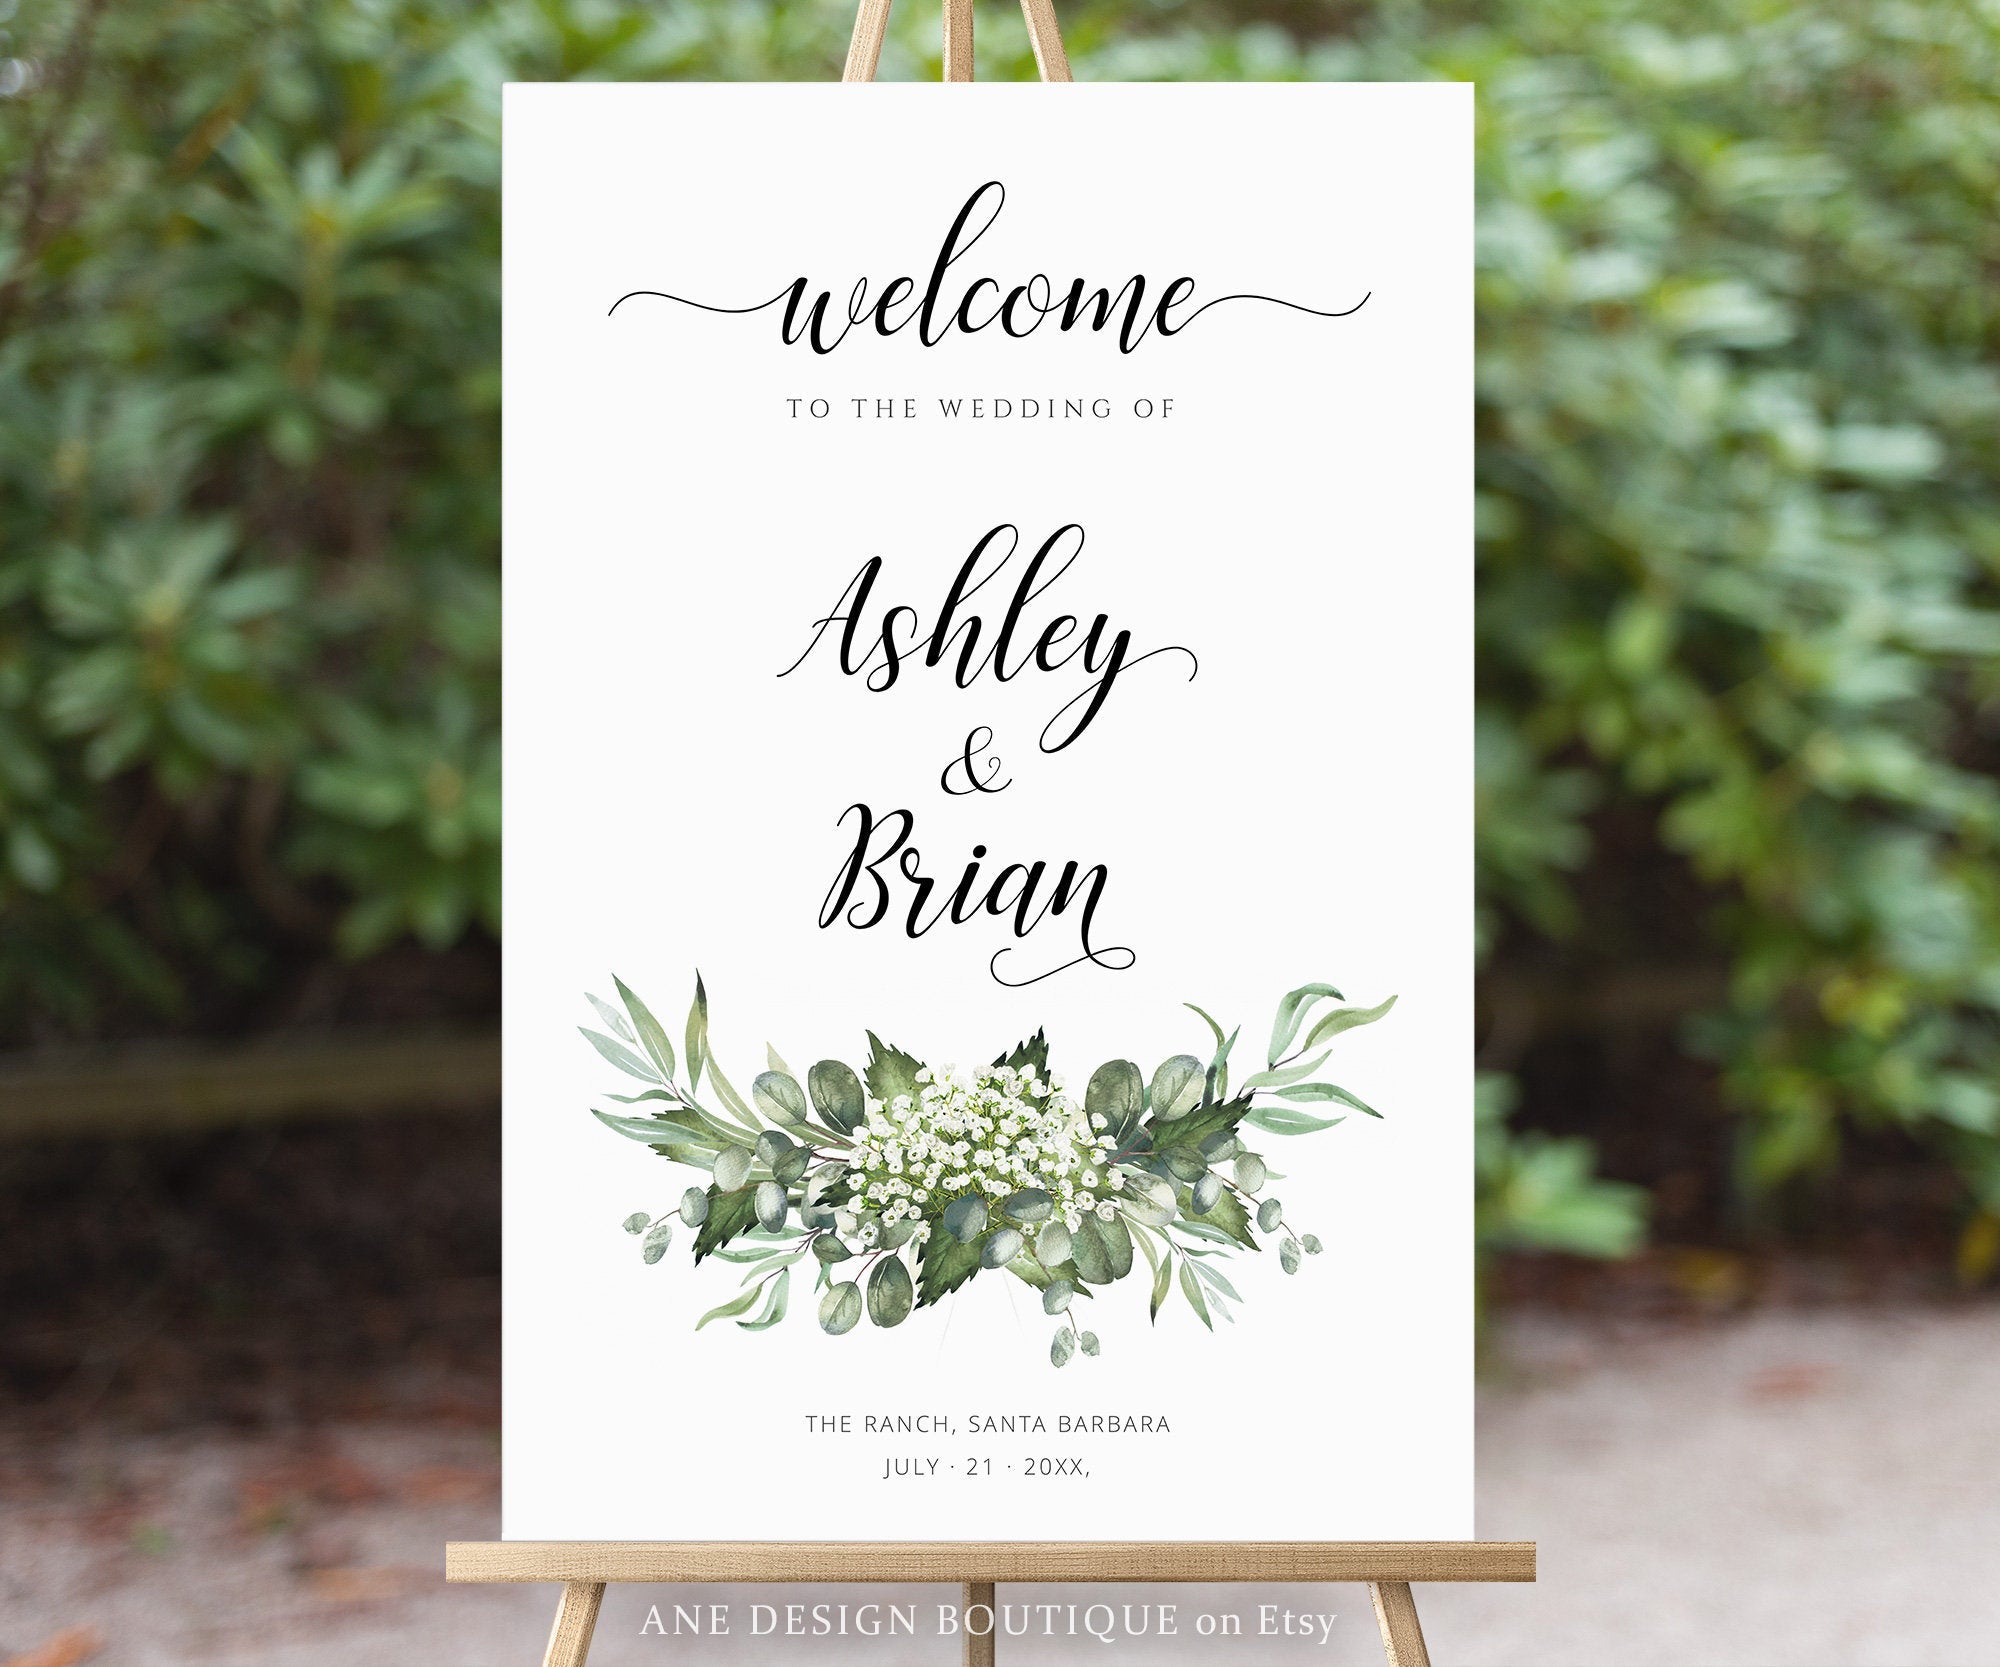 wedding welcome board design